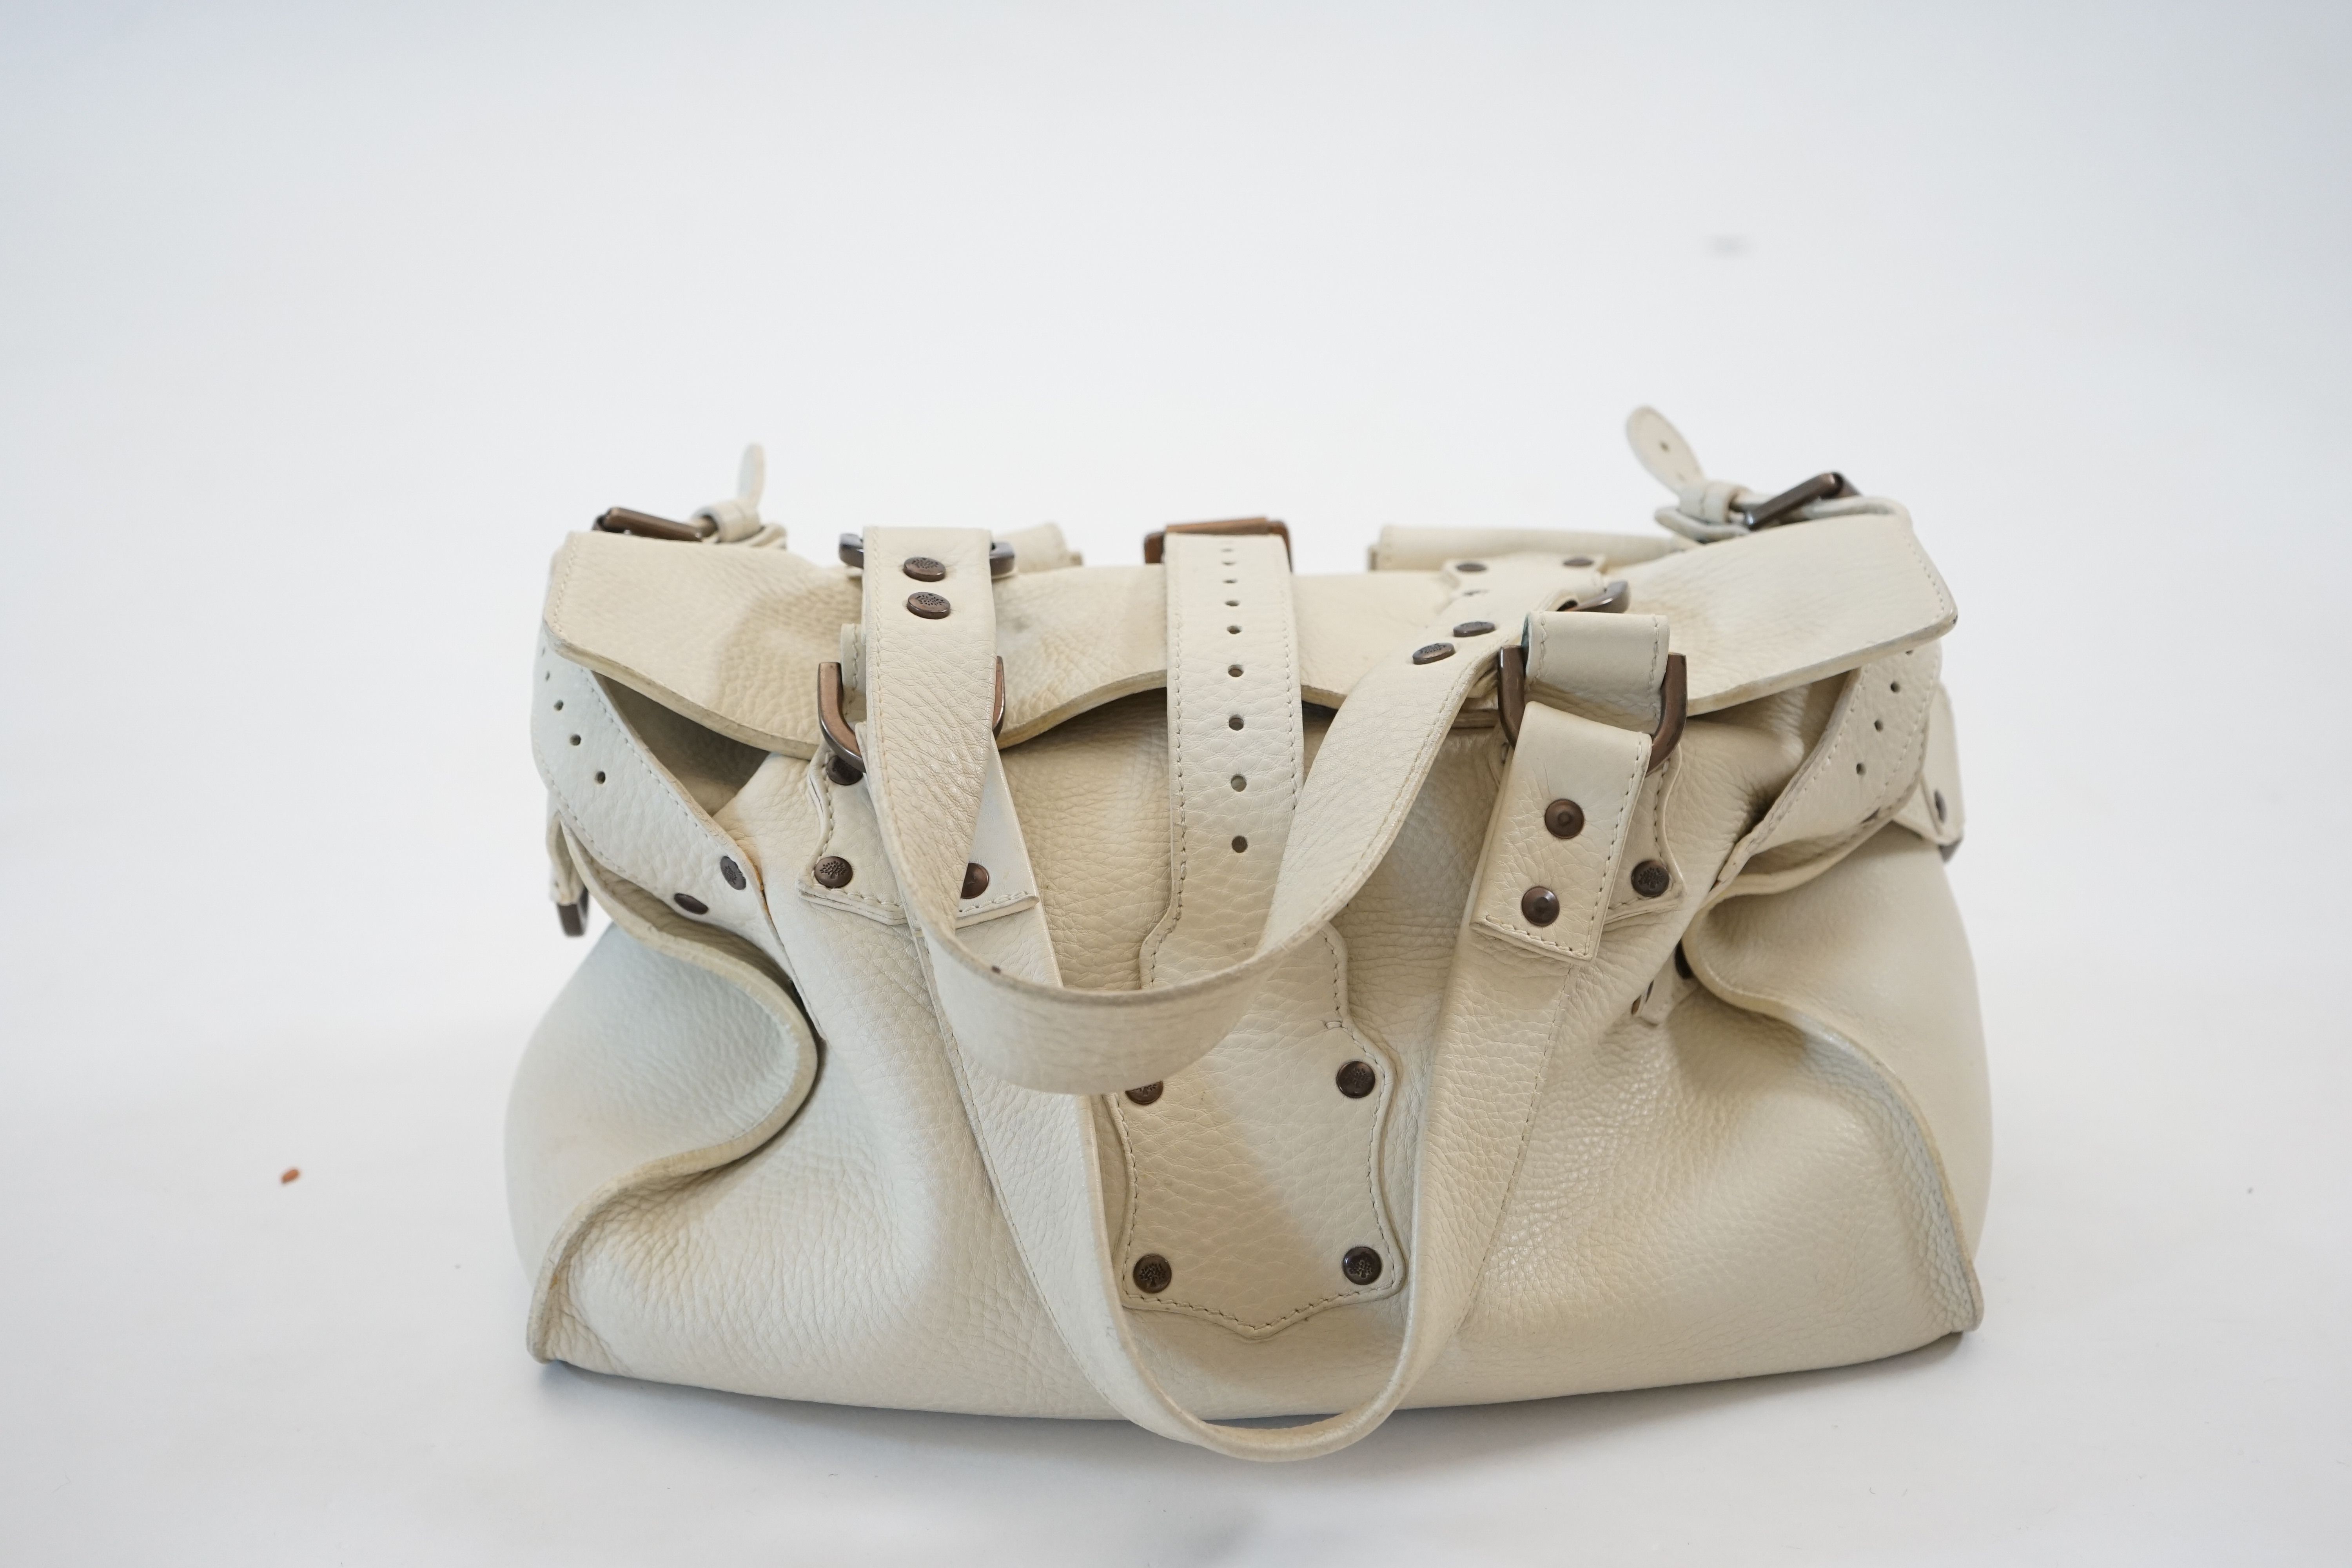 A Mulberry Roxanne cream leather handbag width 34cm, depth 15cm, height 18cm